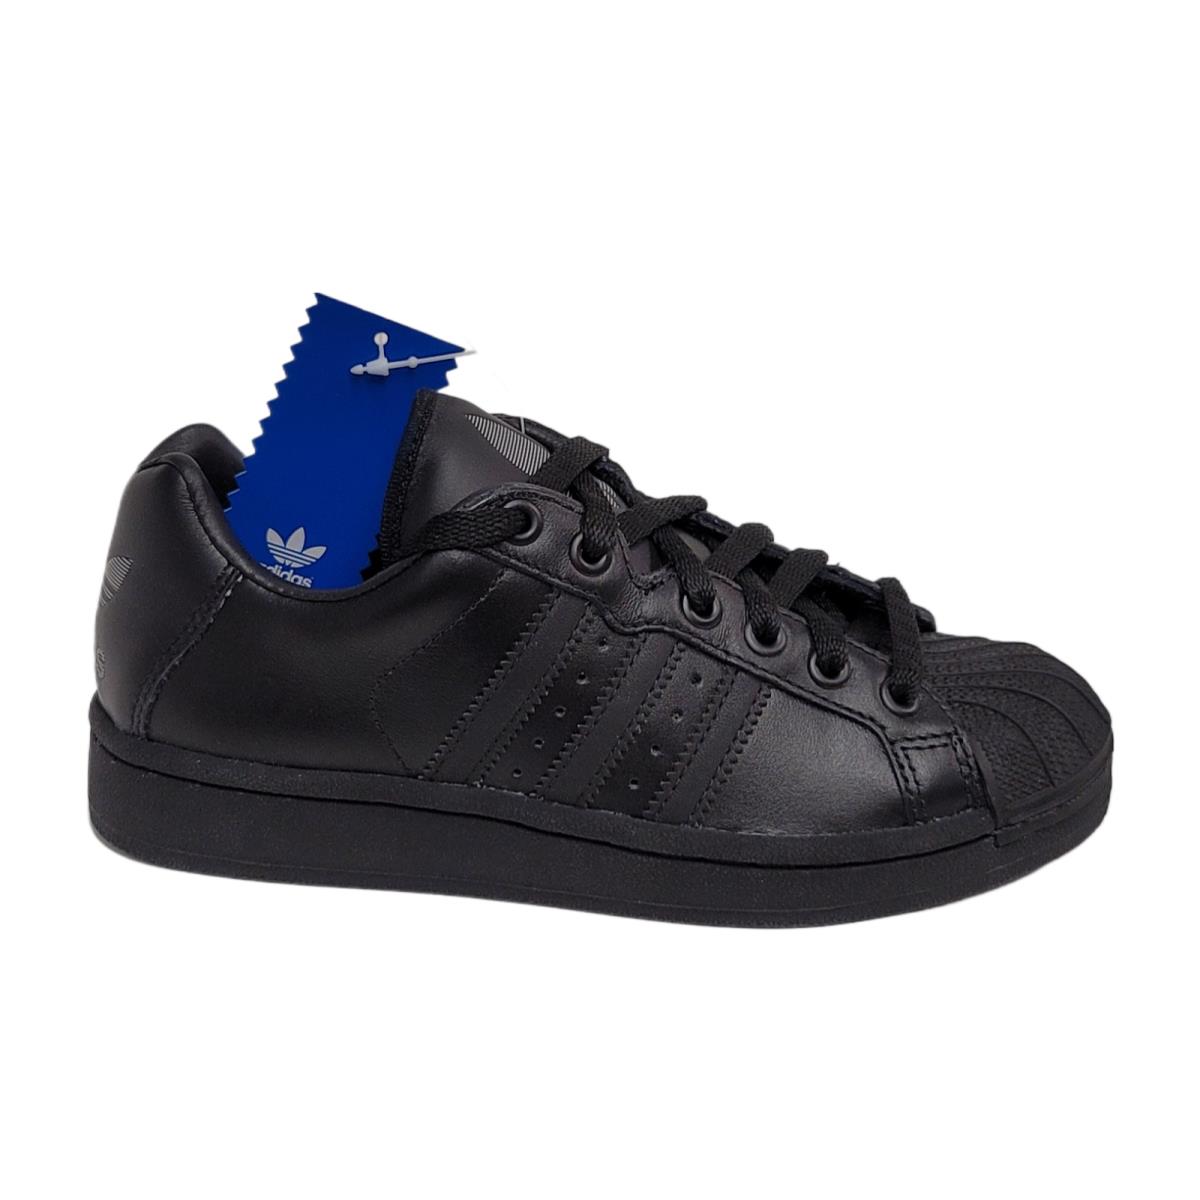 Adidas Men Lifestyle Ultrastar Leather Sneaker Black / Silver Metallic 011387